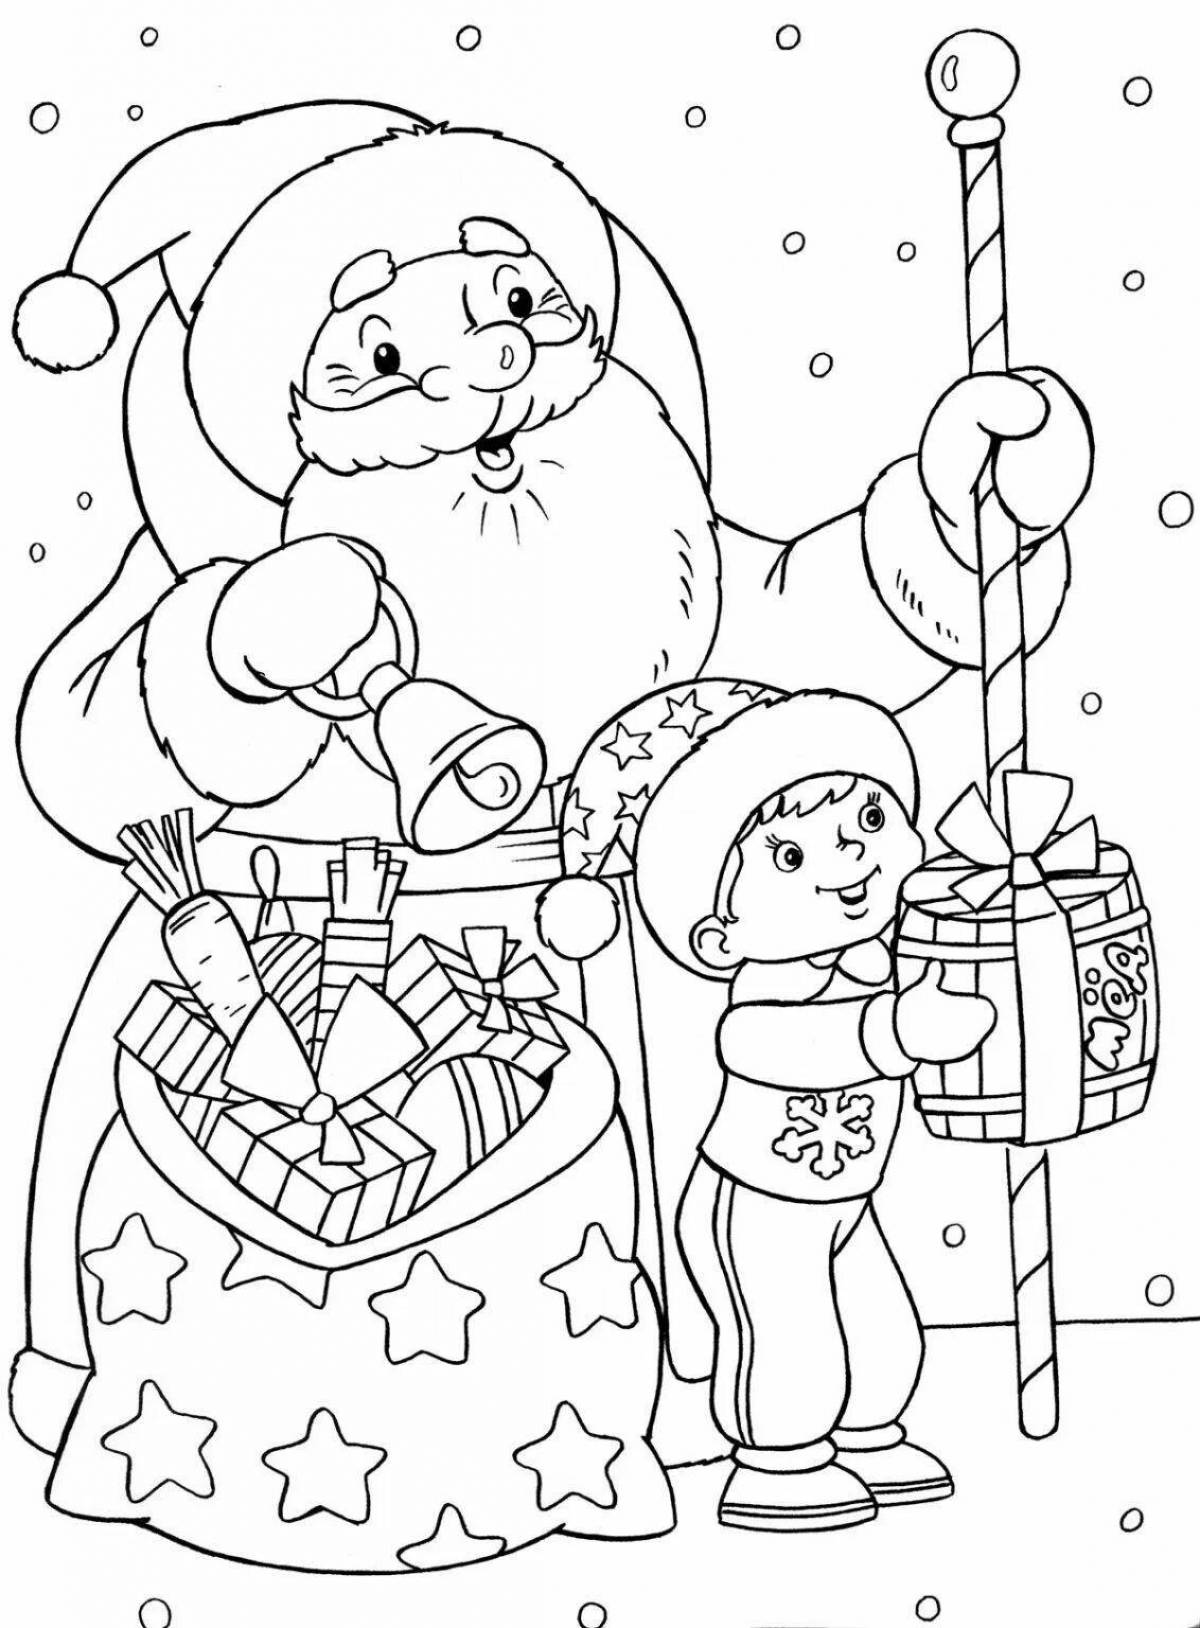 Fantastic Christmas drawing for kids